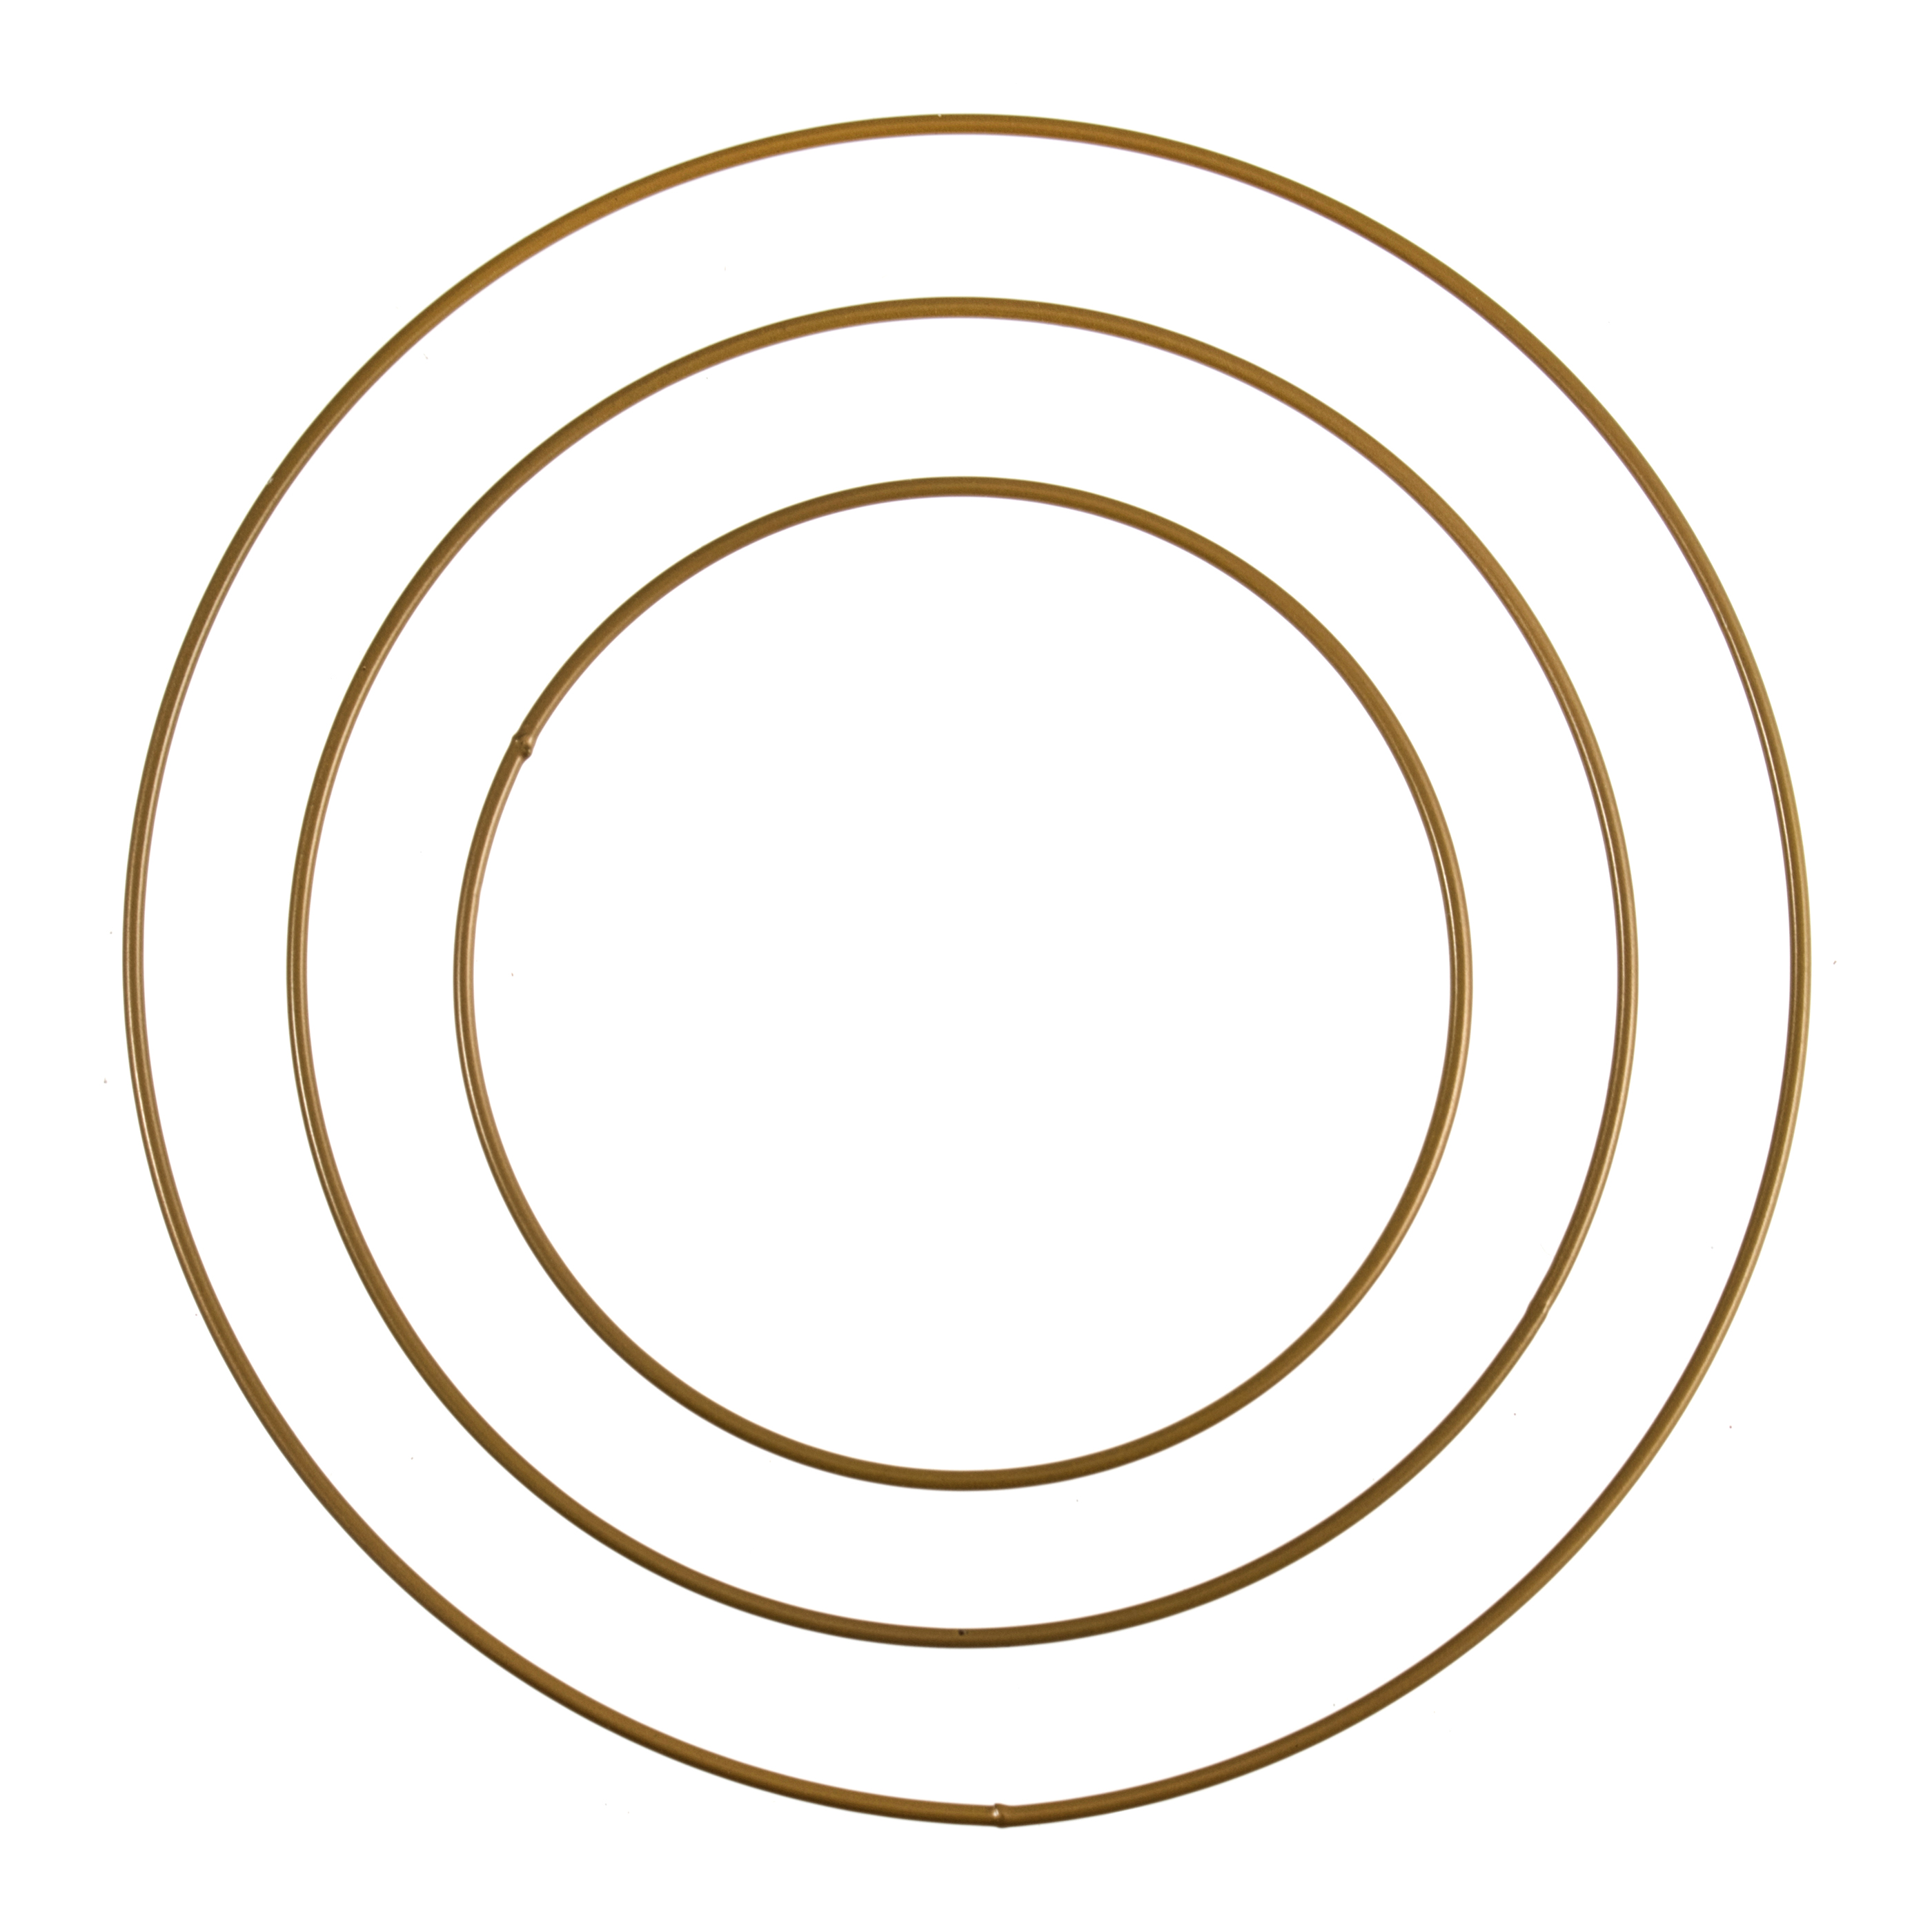 Trimits Set of 3 Metal Craft Rings (TRH15) gold macrame hoops (15, 20